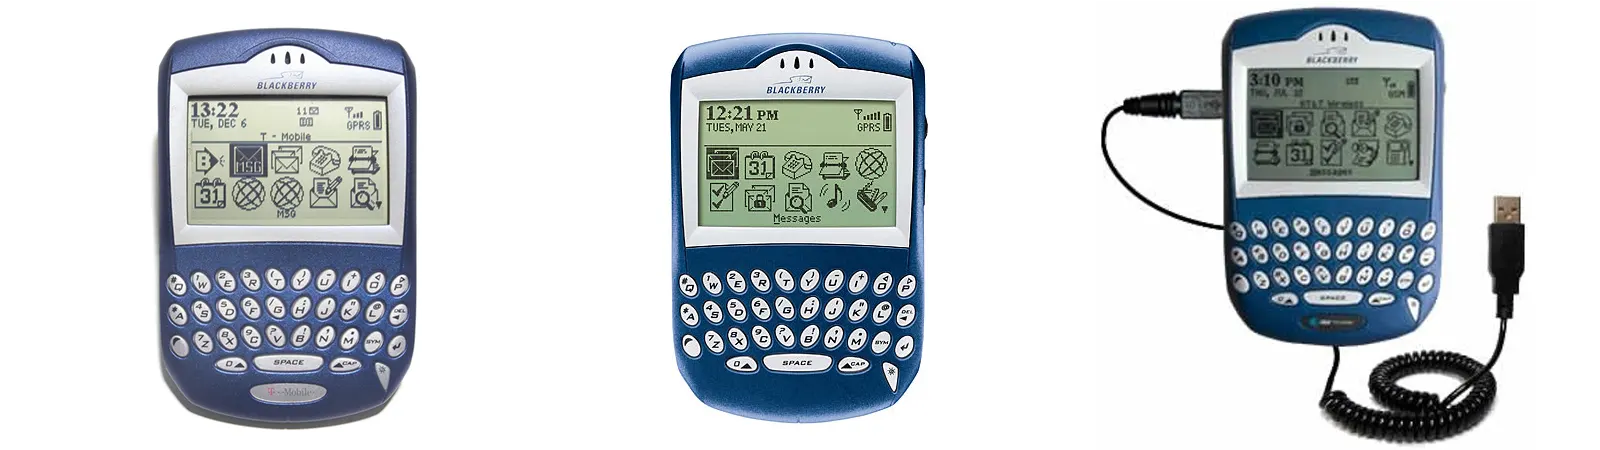 Blackberry (Rim) 6210 (2003)